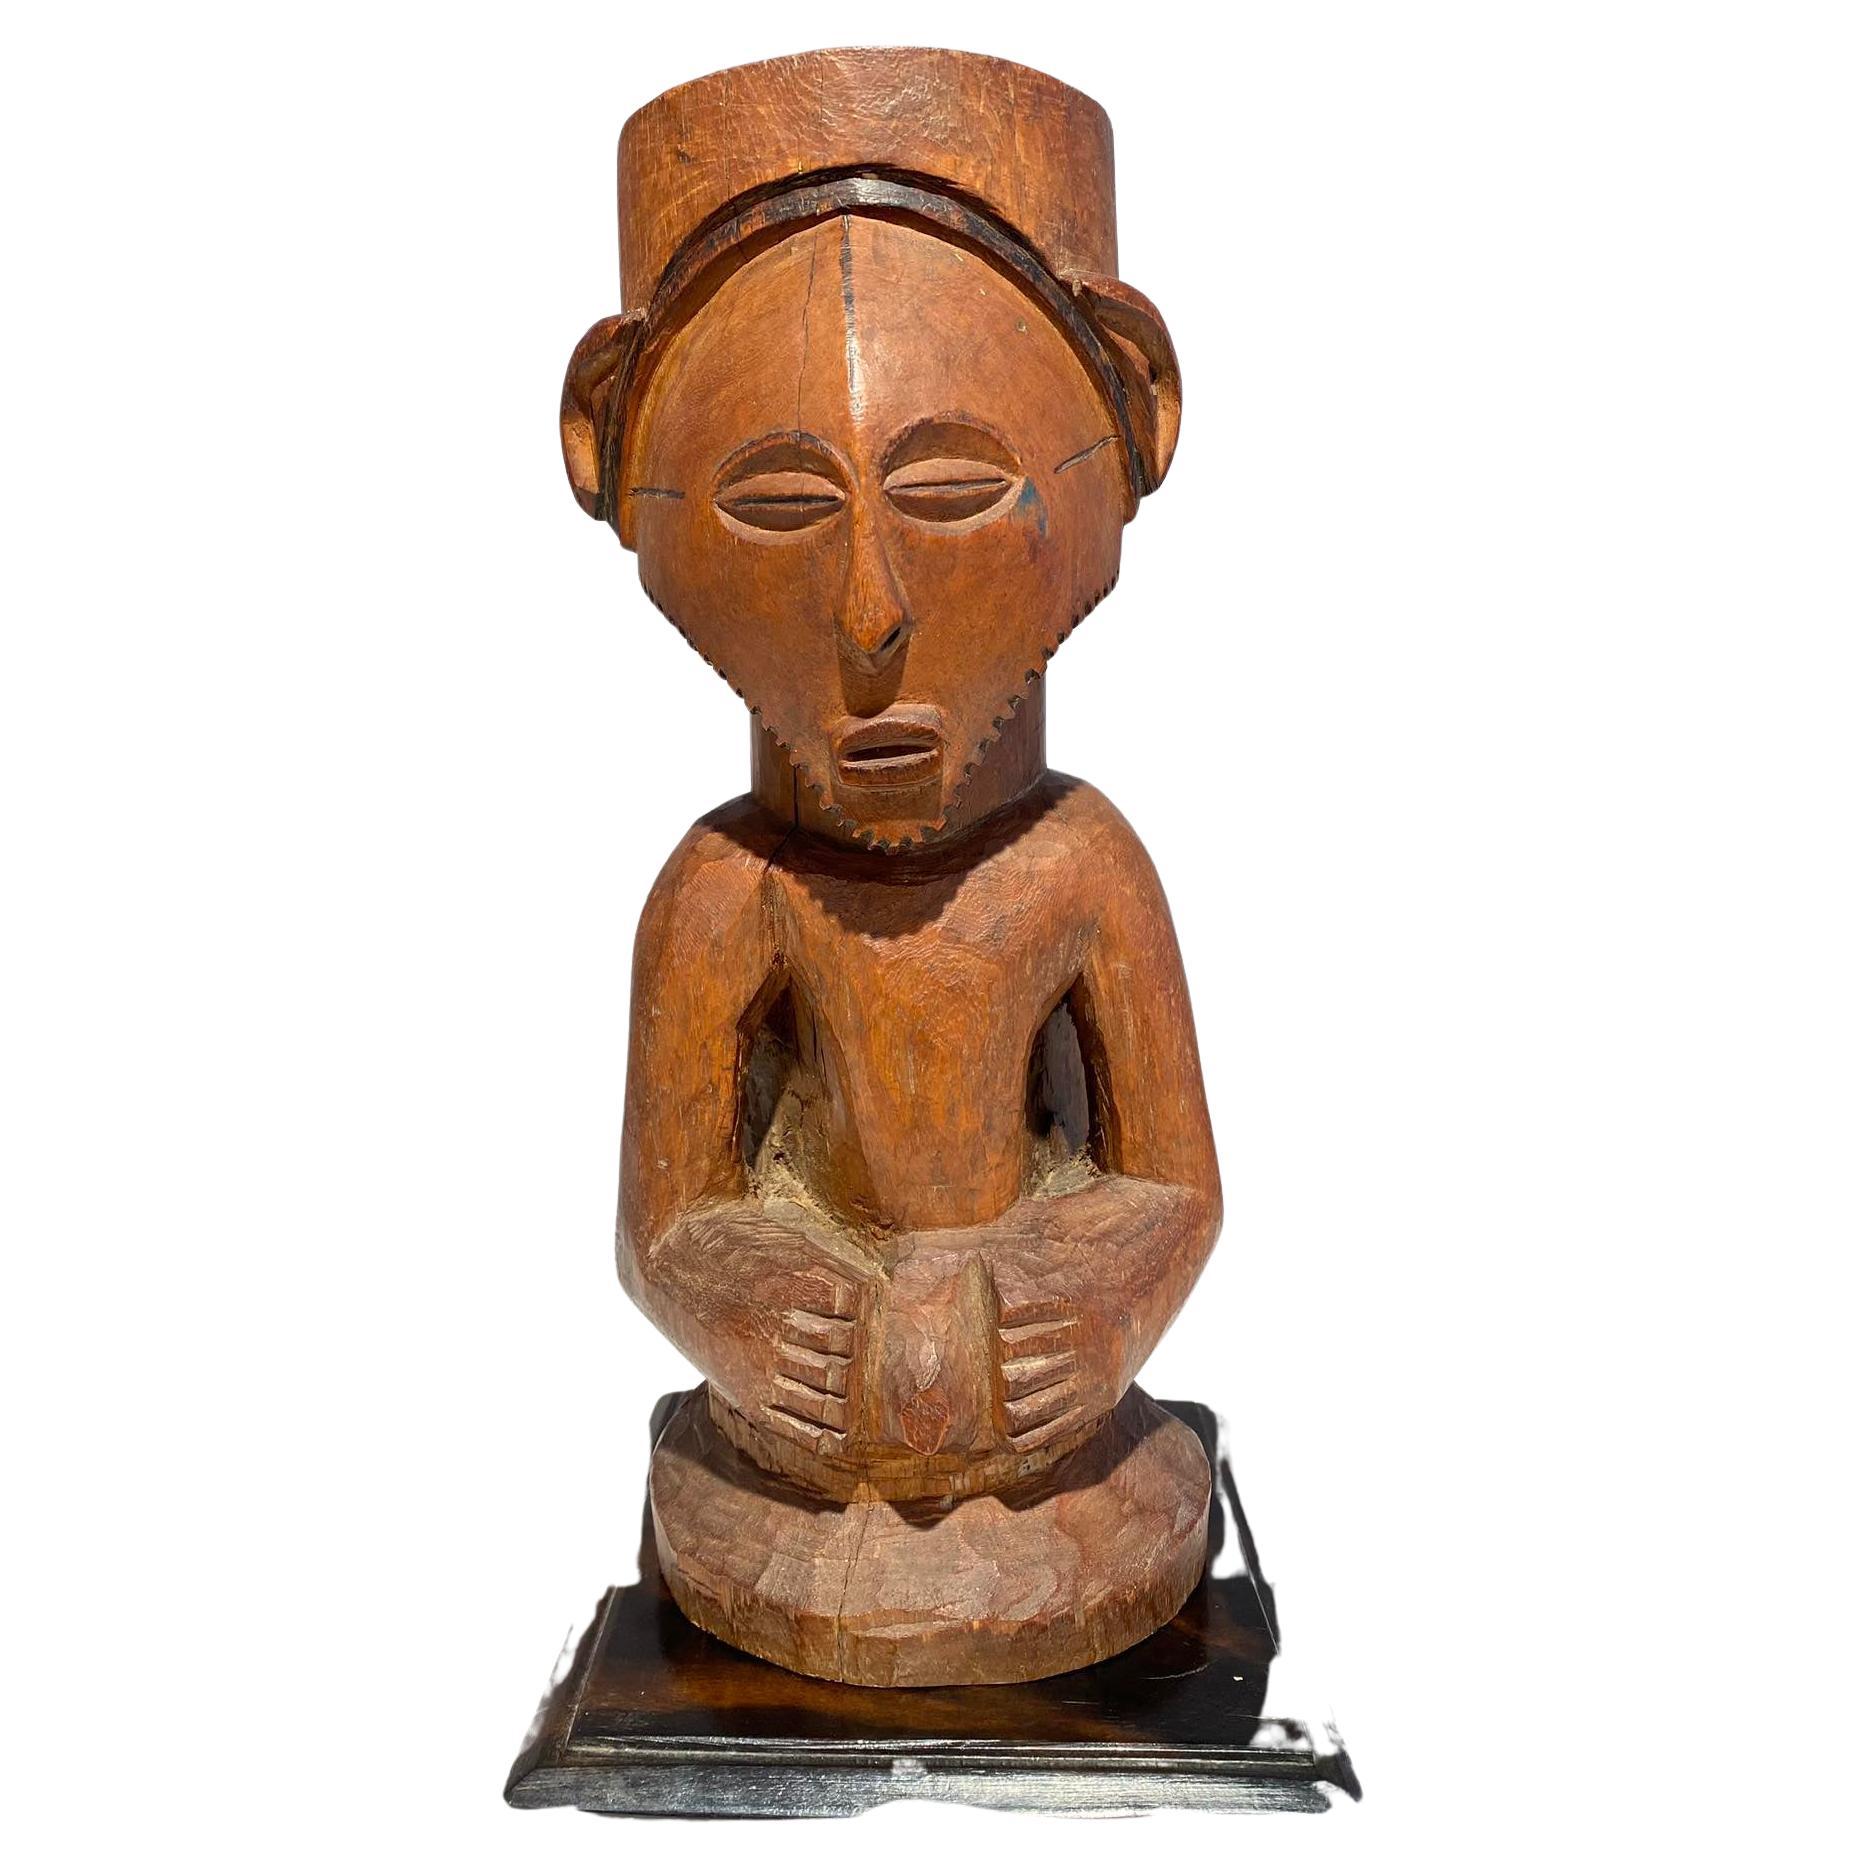 Kusu wooden ancestor fetish ca 1900 DR Congo Africa Central African Tribal Art For Sale